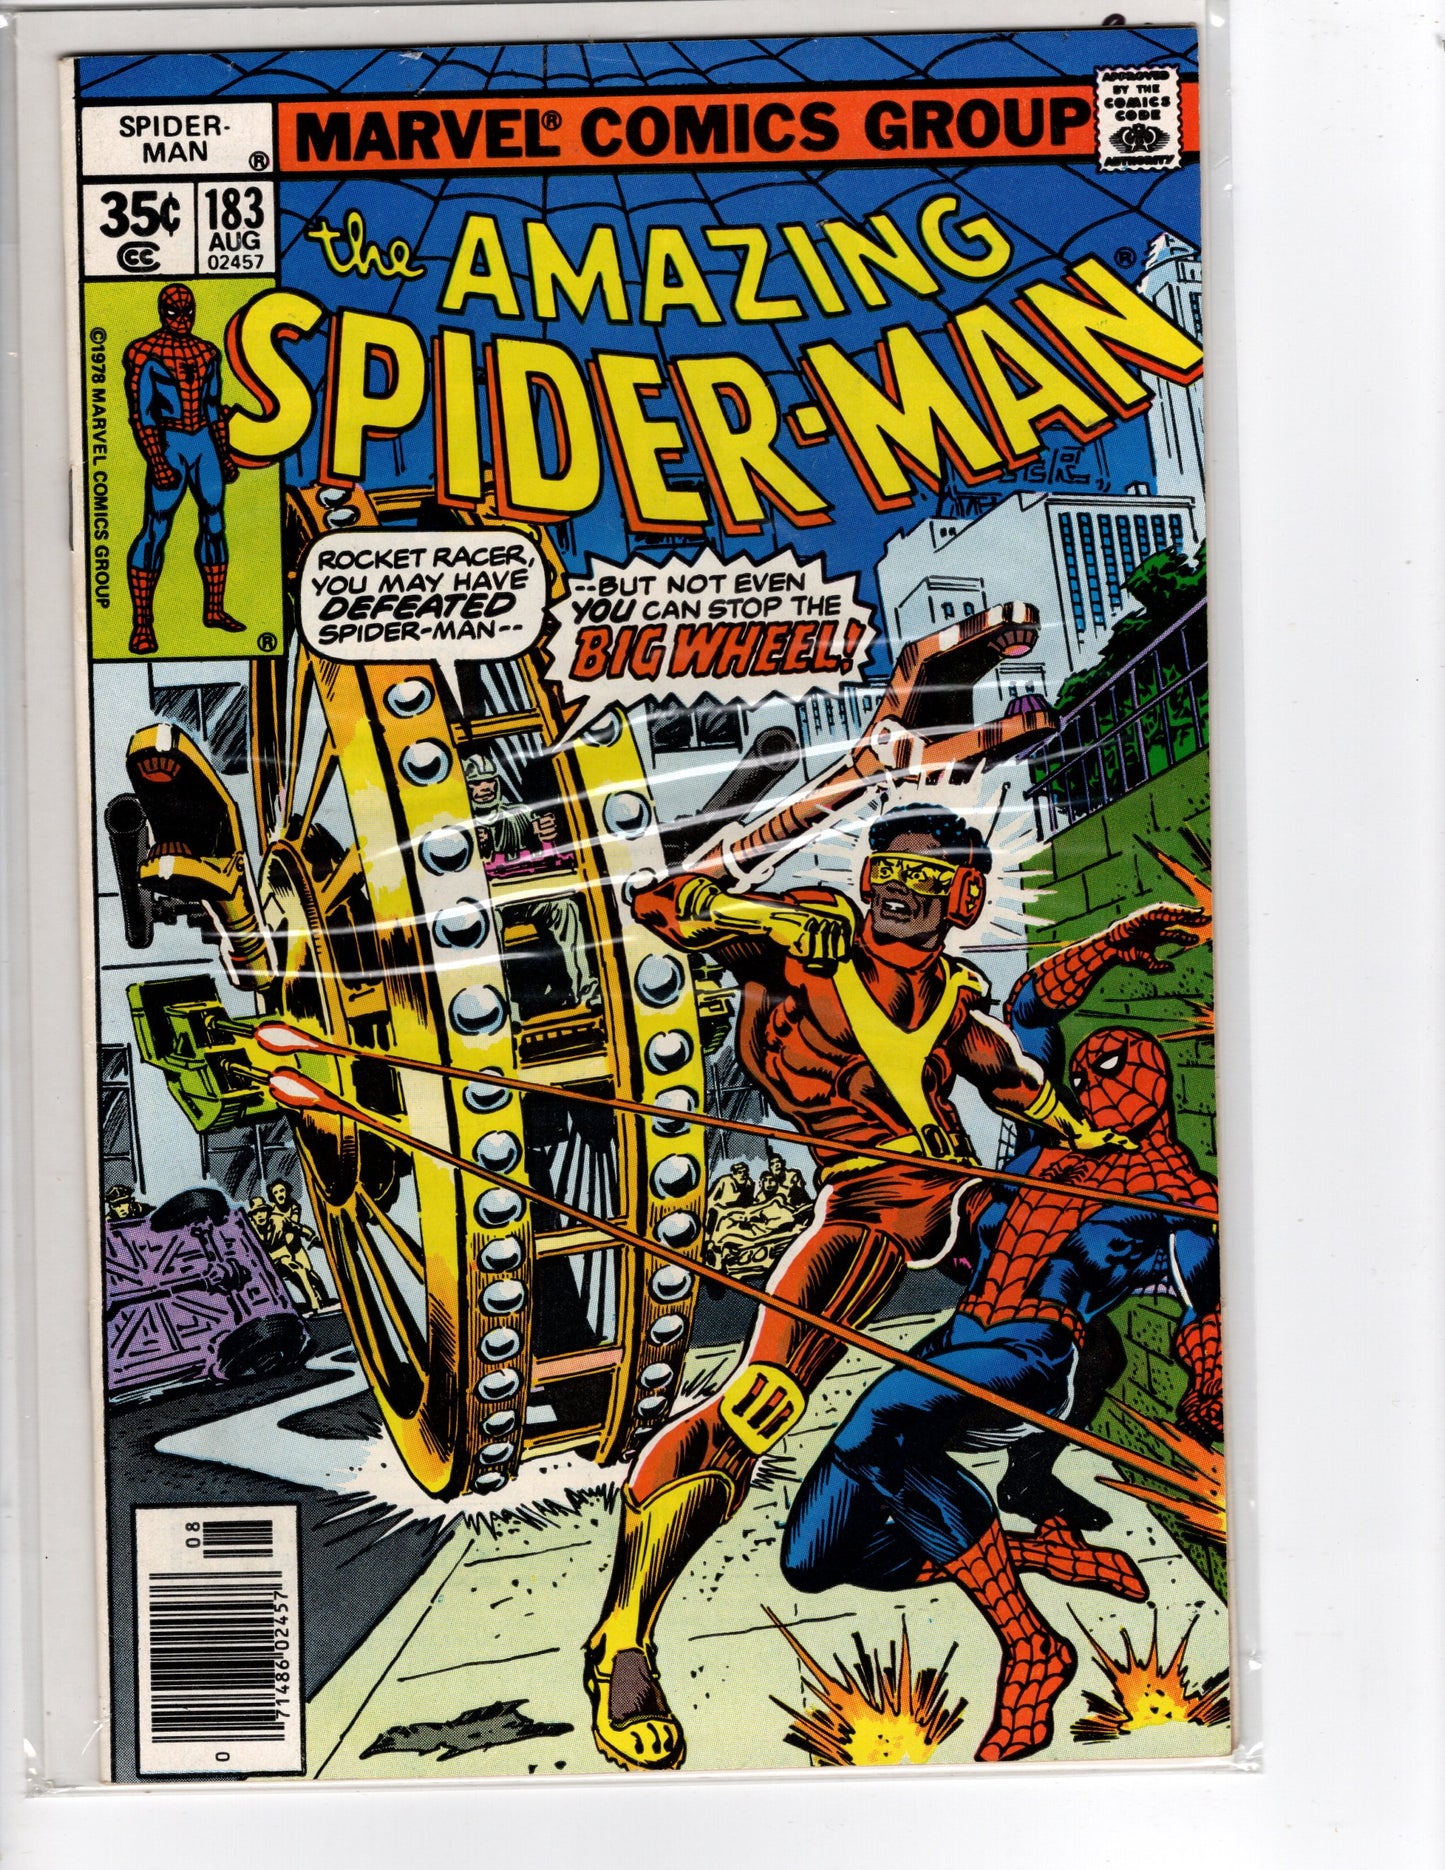 The Amazing Spider-Man #183